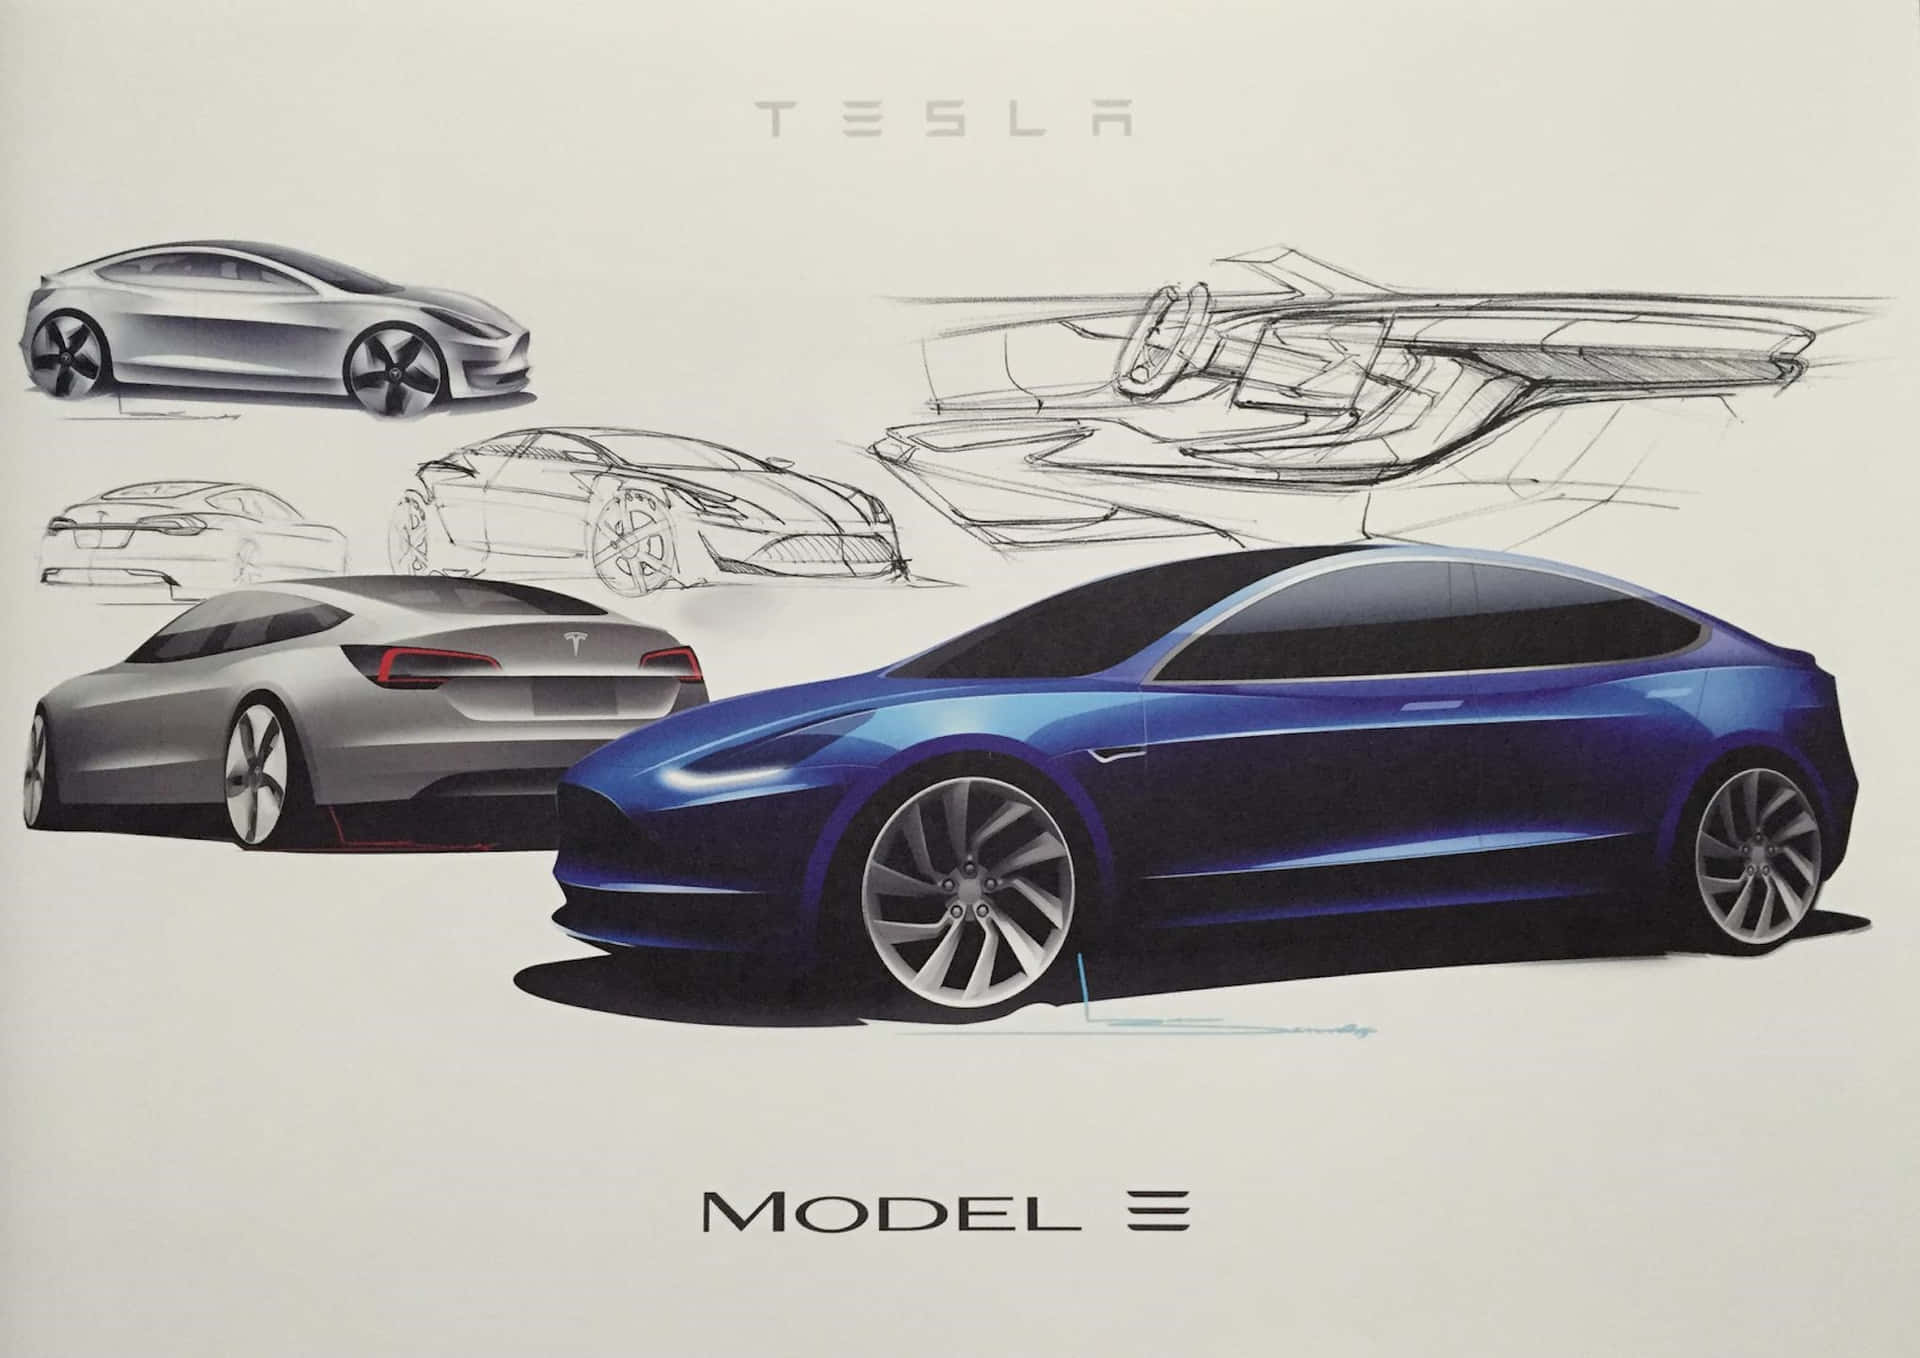 Teslamodel 3: Miljövänlig Lyx.